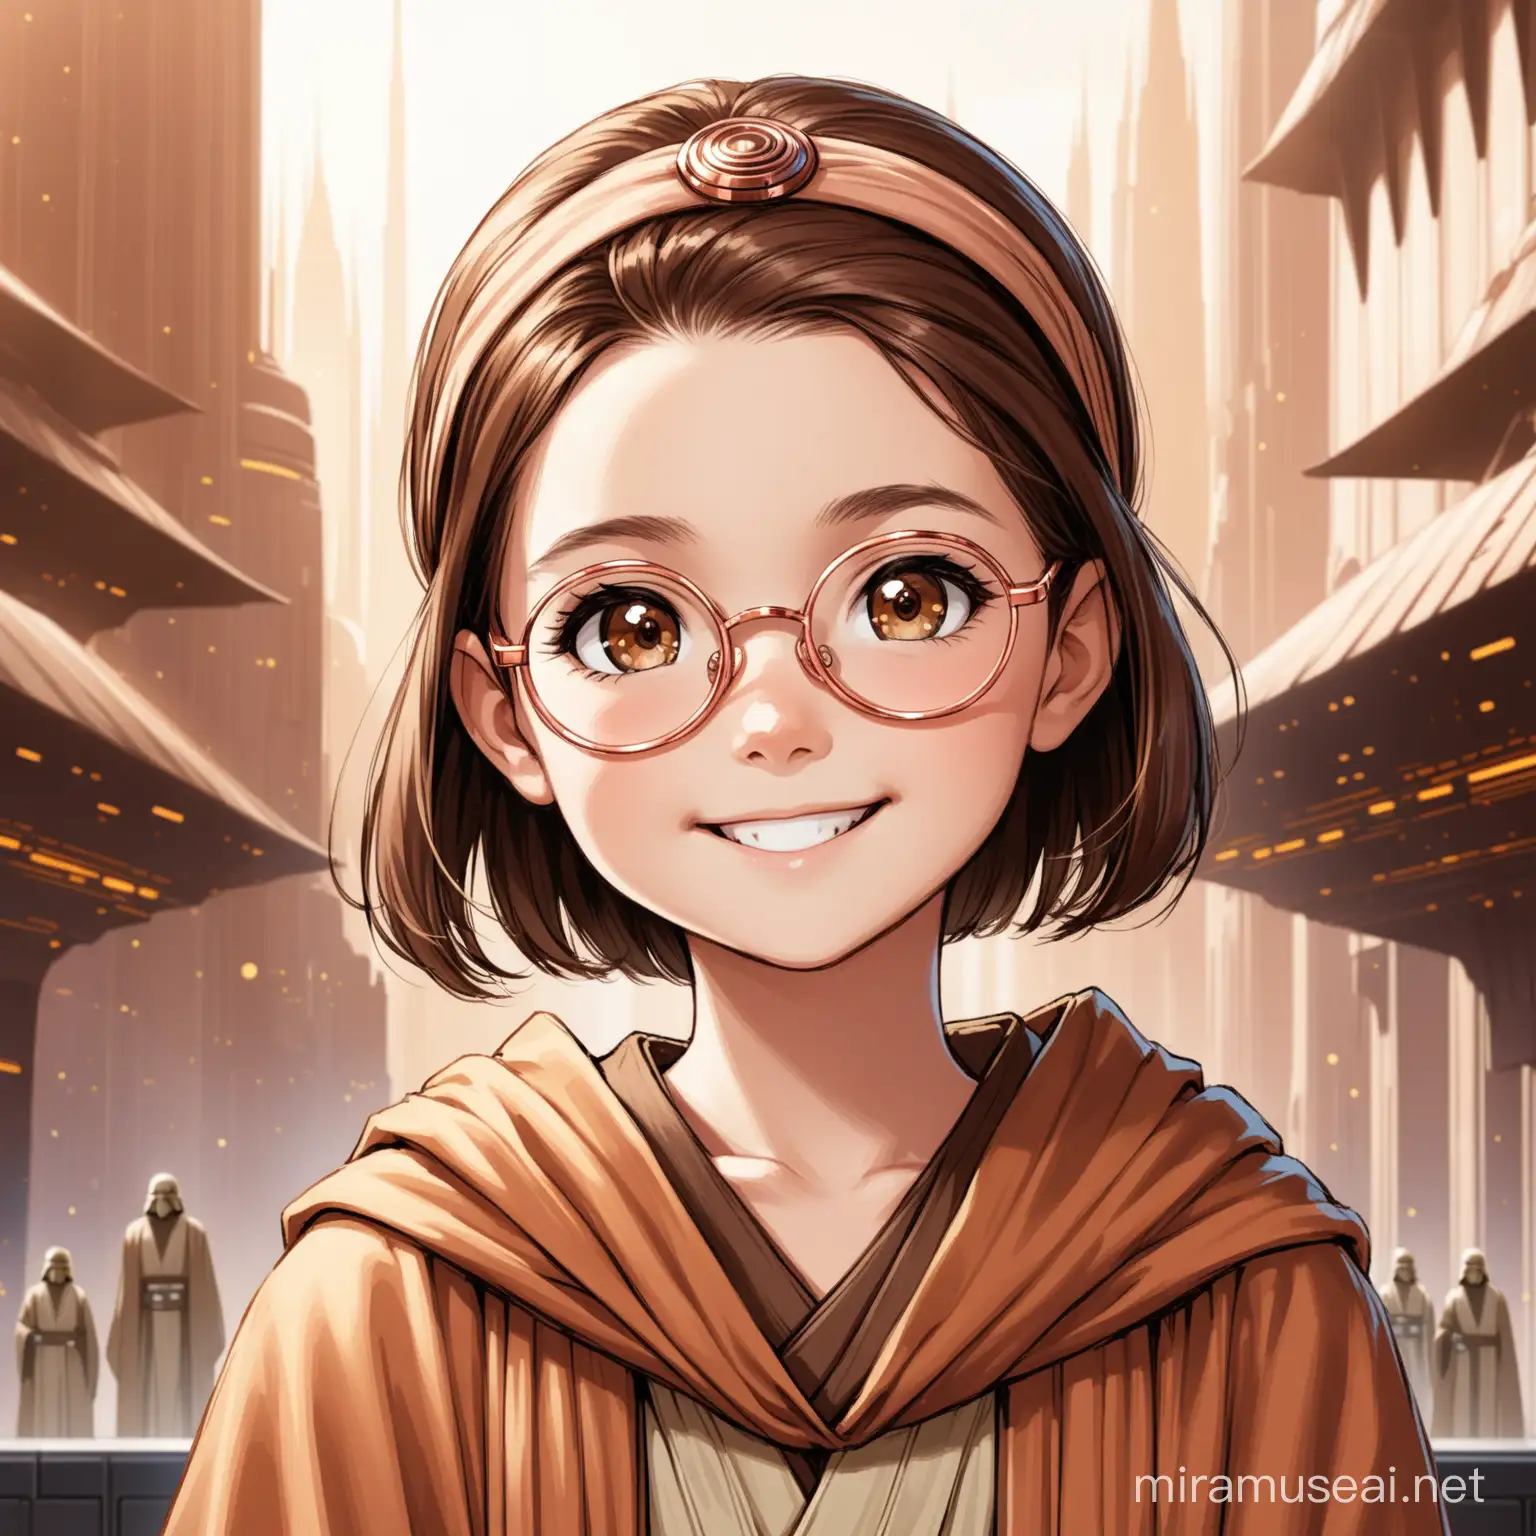 Joyful 12YearOld Jedi Girl in Rose Gold Glasses on Coruscant